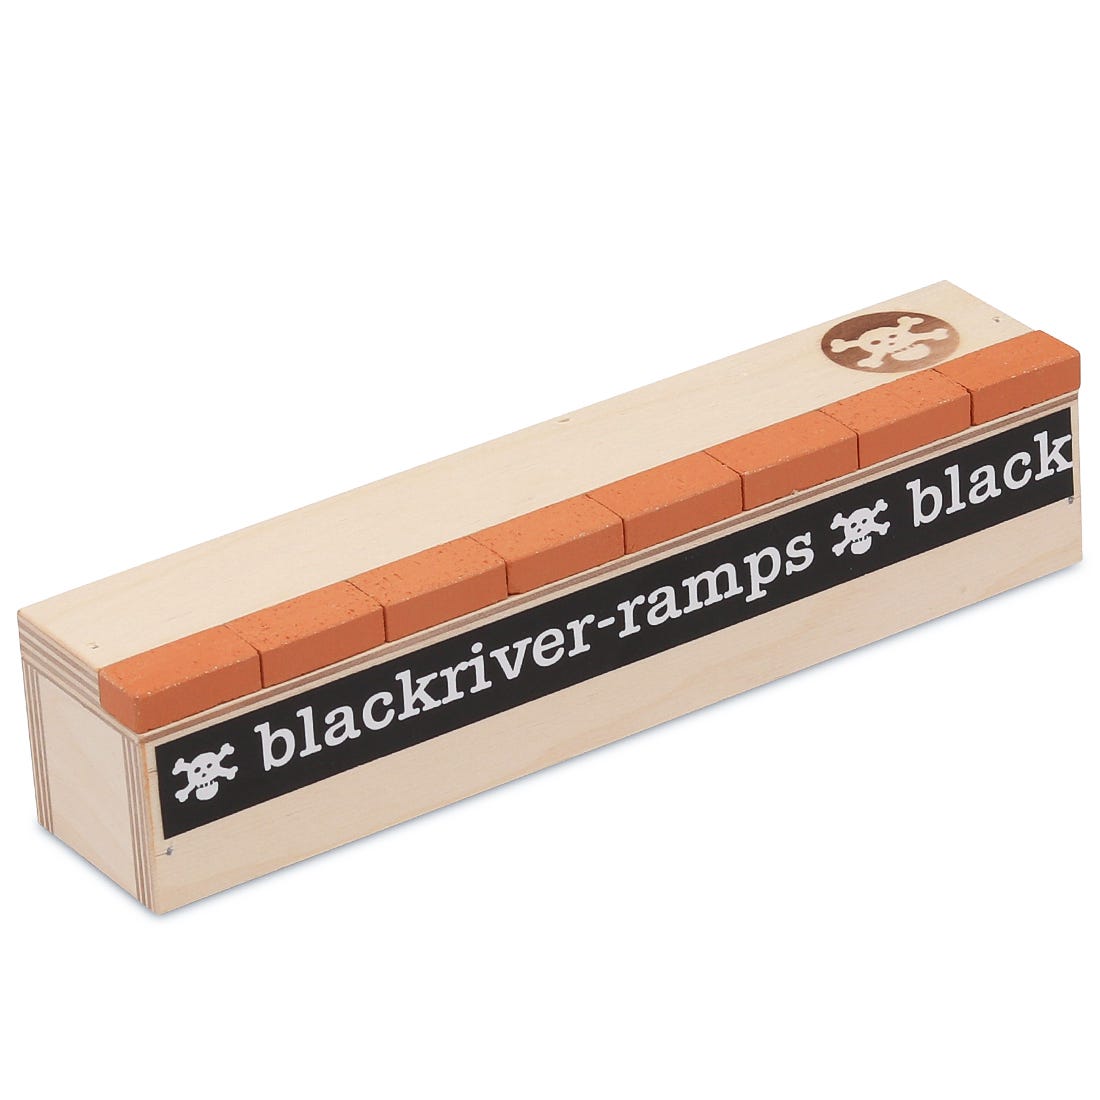 Blackriver Fingerboard Ramps - Brick Box